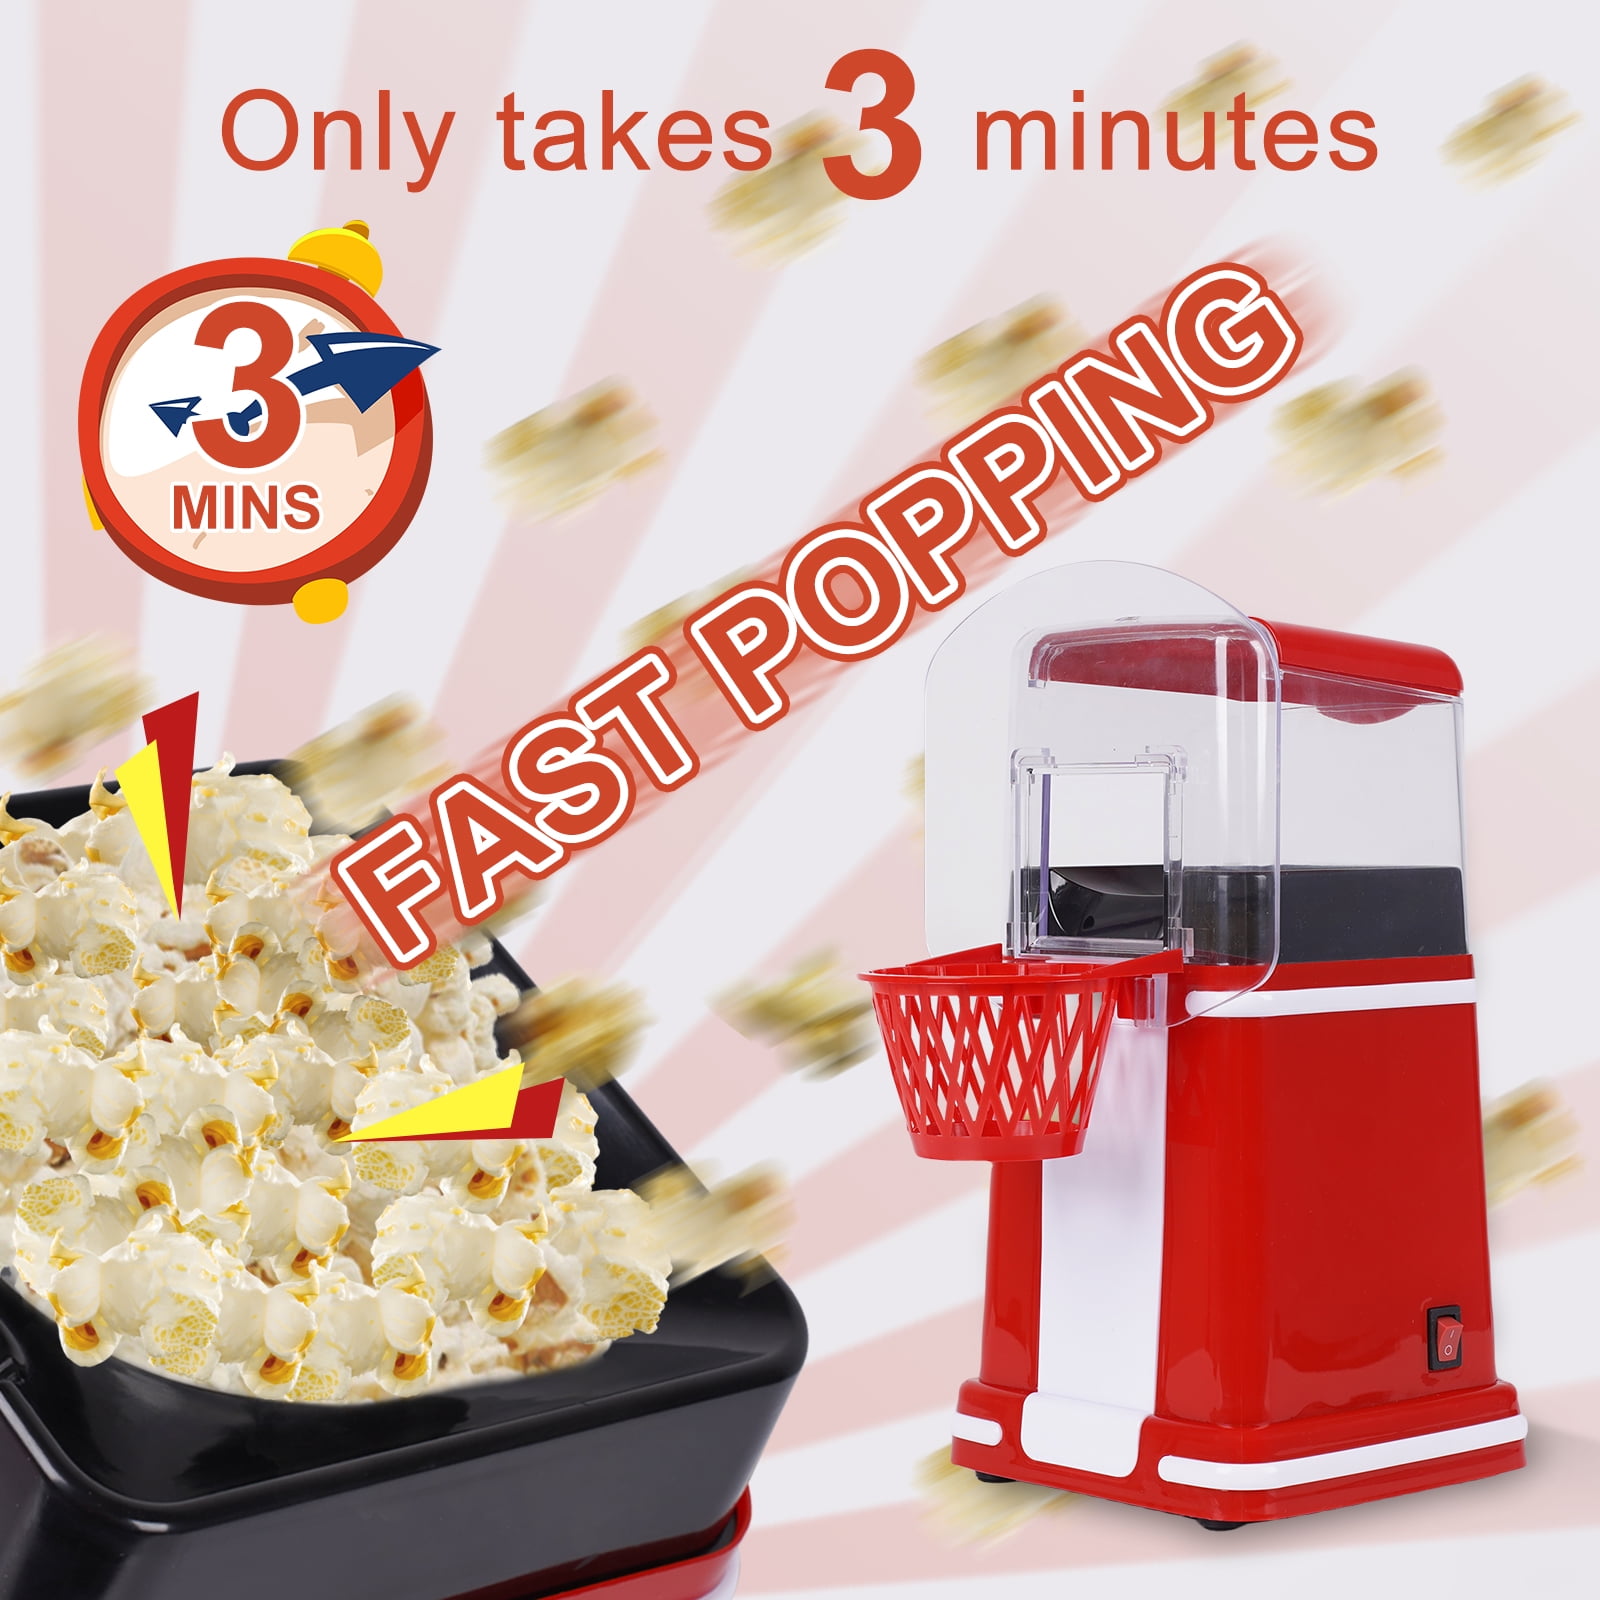 Generic 1200W Popcorn Popper Popcorn Maker Electric Popcorn Machine No Oil Needed for Home Family Kids Purple